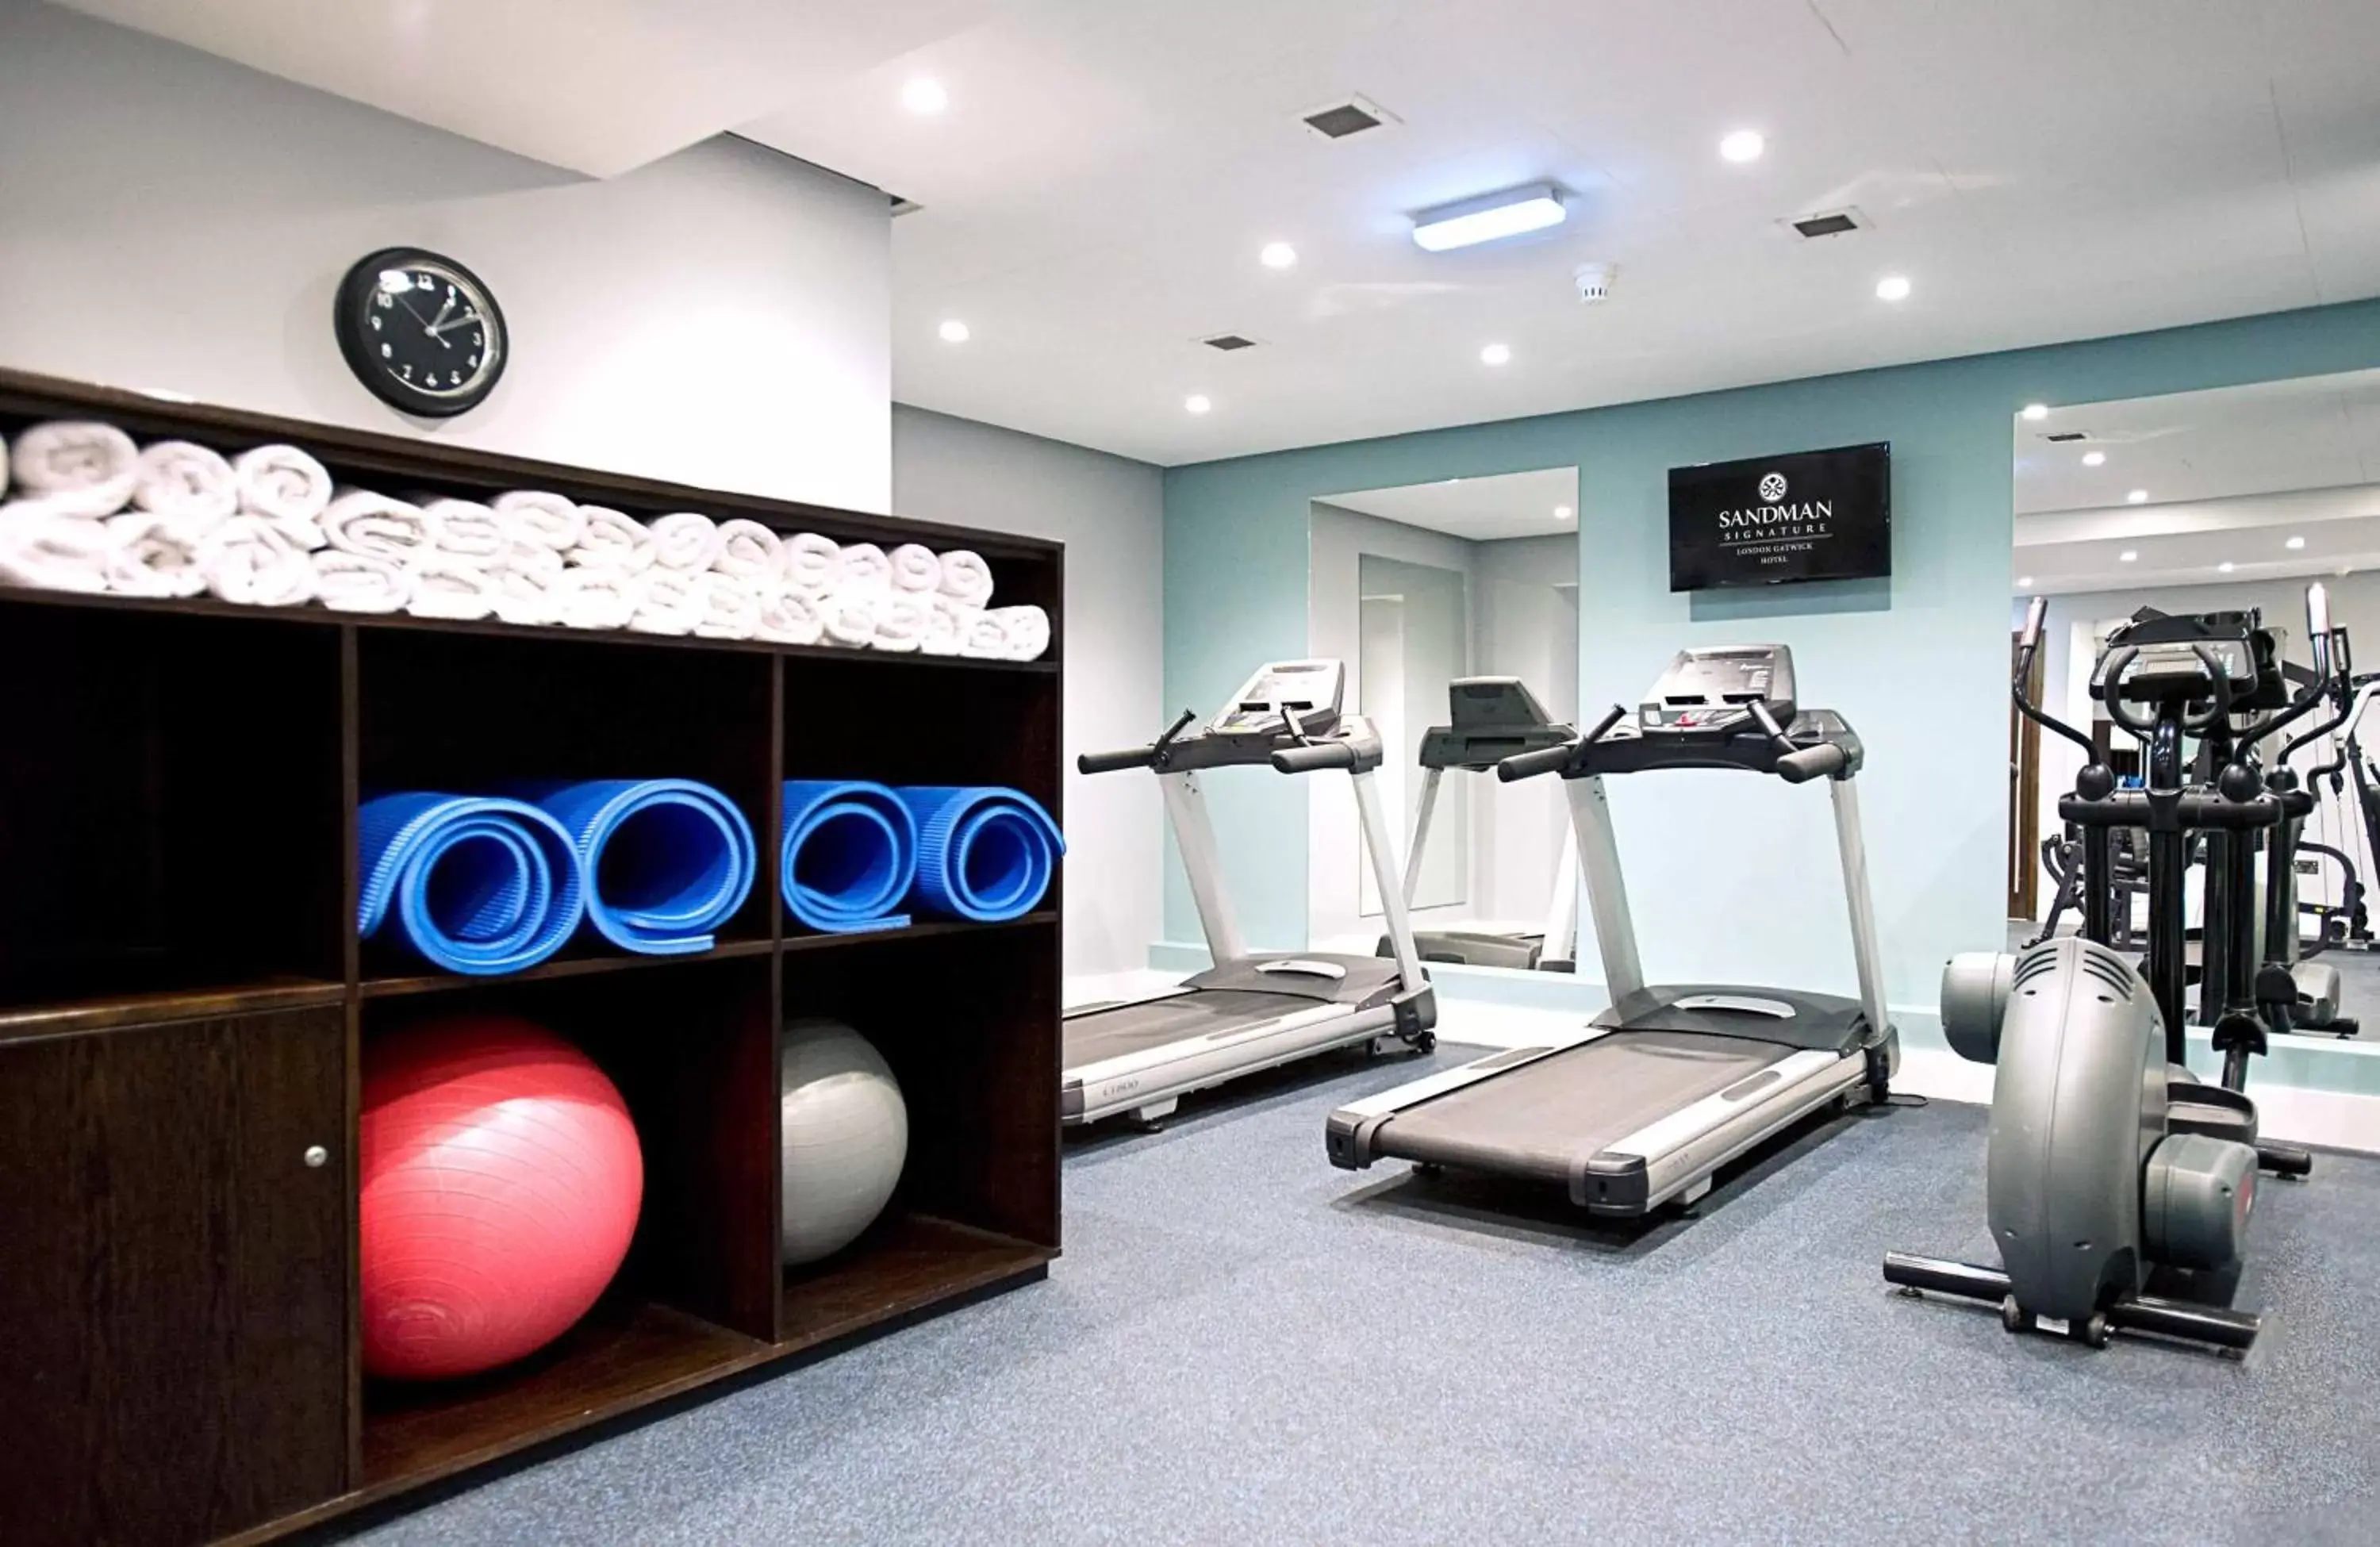 Fitness centre/facilities, Fitness Center/Facilities in Sandman Signature London Gatwick Hotel